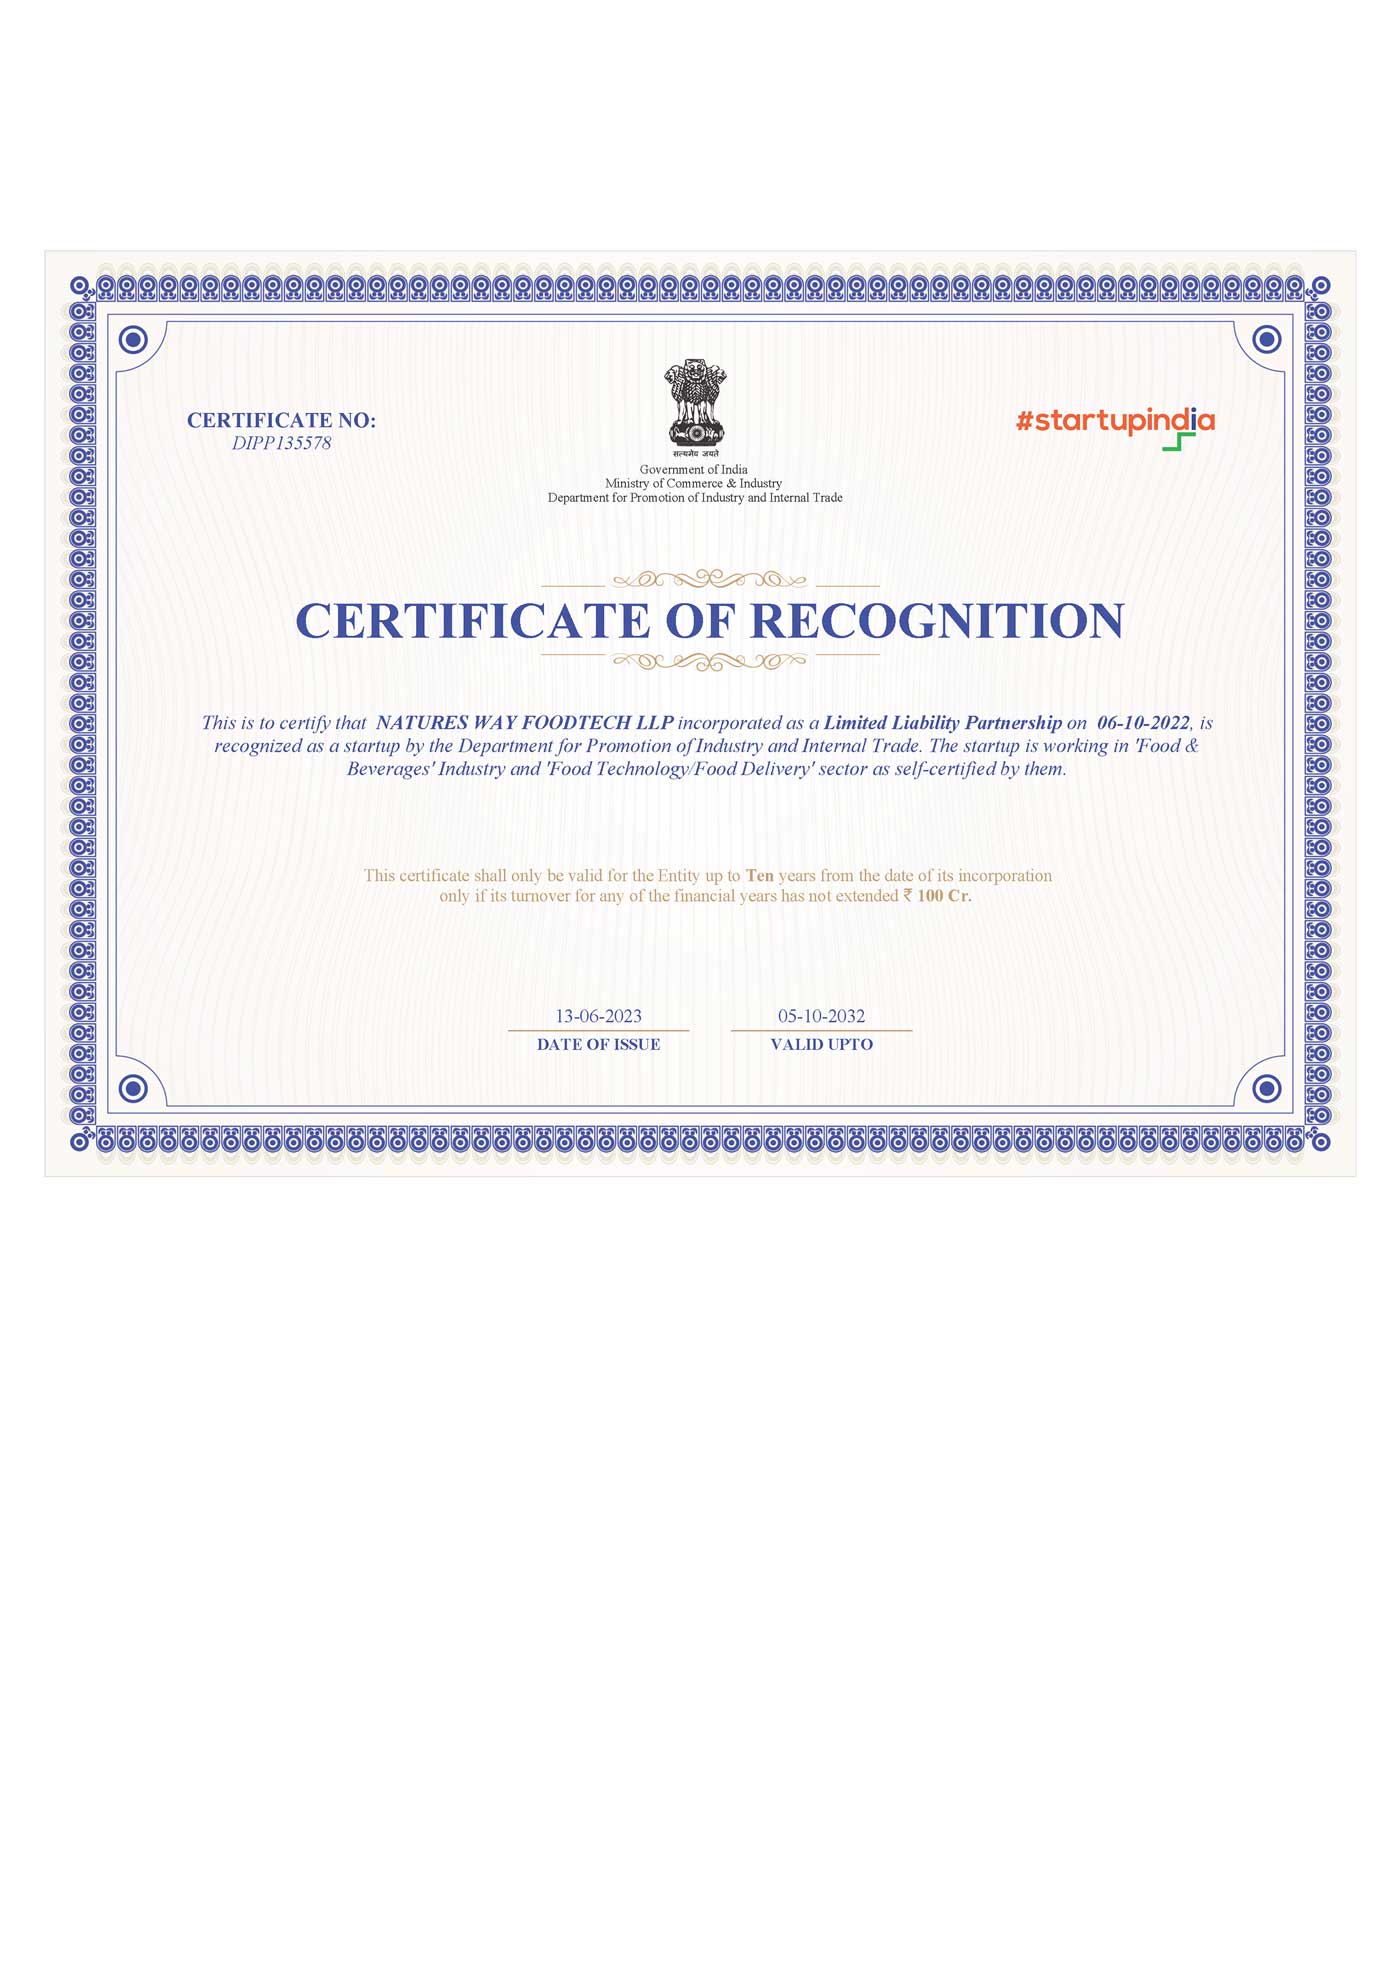 startup-india-certificate-lower.jpg__PID:b8784033-1326-45a5-8d8b-8068643617aa